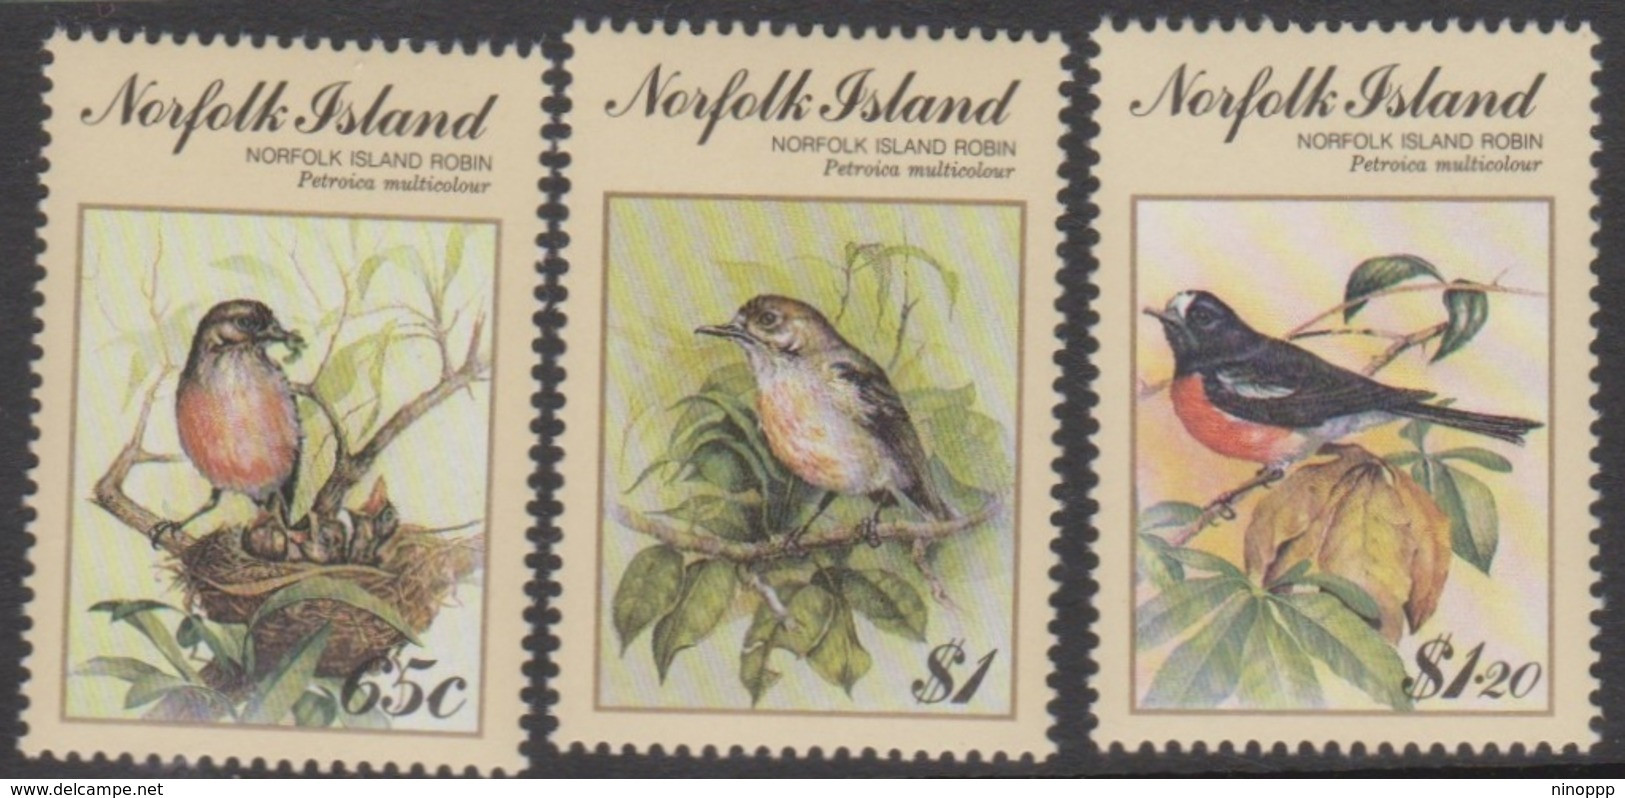 Norfolk Island ASC 485-487 1990 Robin Redbreast, Mint Never Hinged - Ile Norfolk